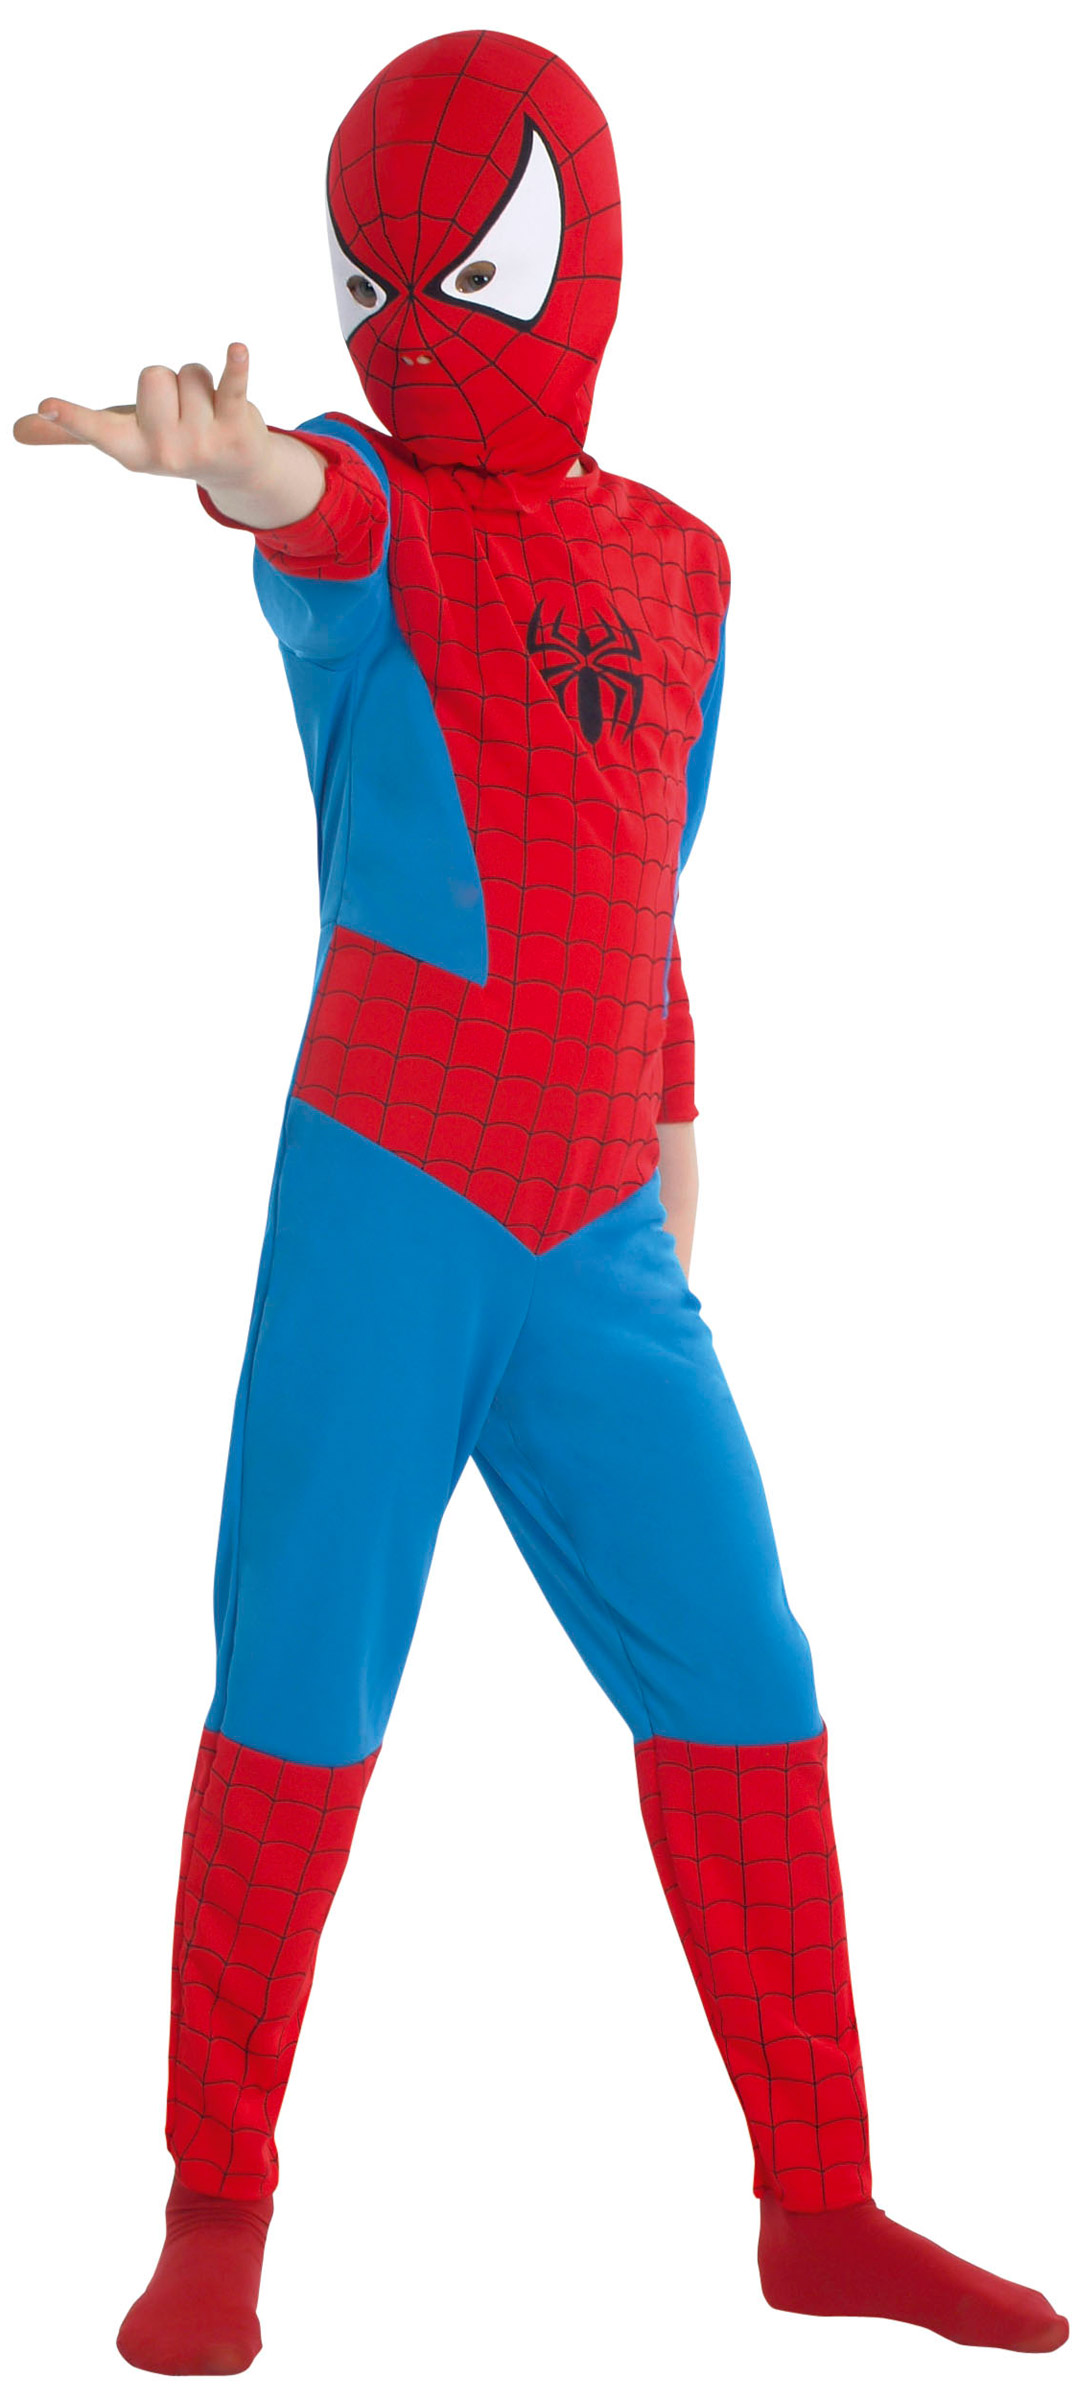 Costume Spider-Man enfant - Déguisement Carnaval, Halloween